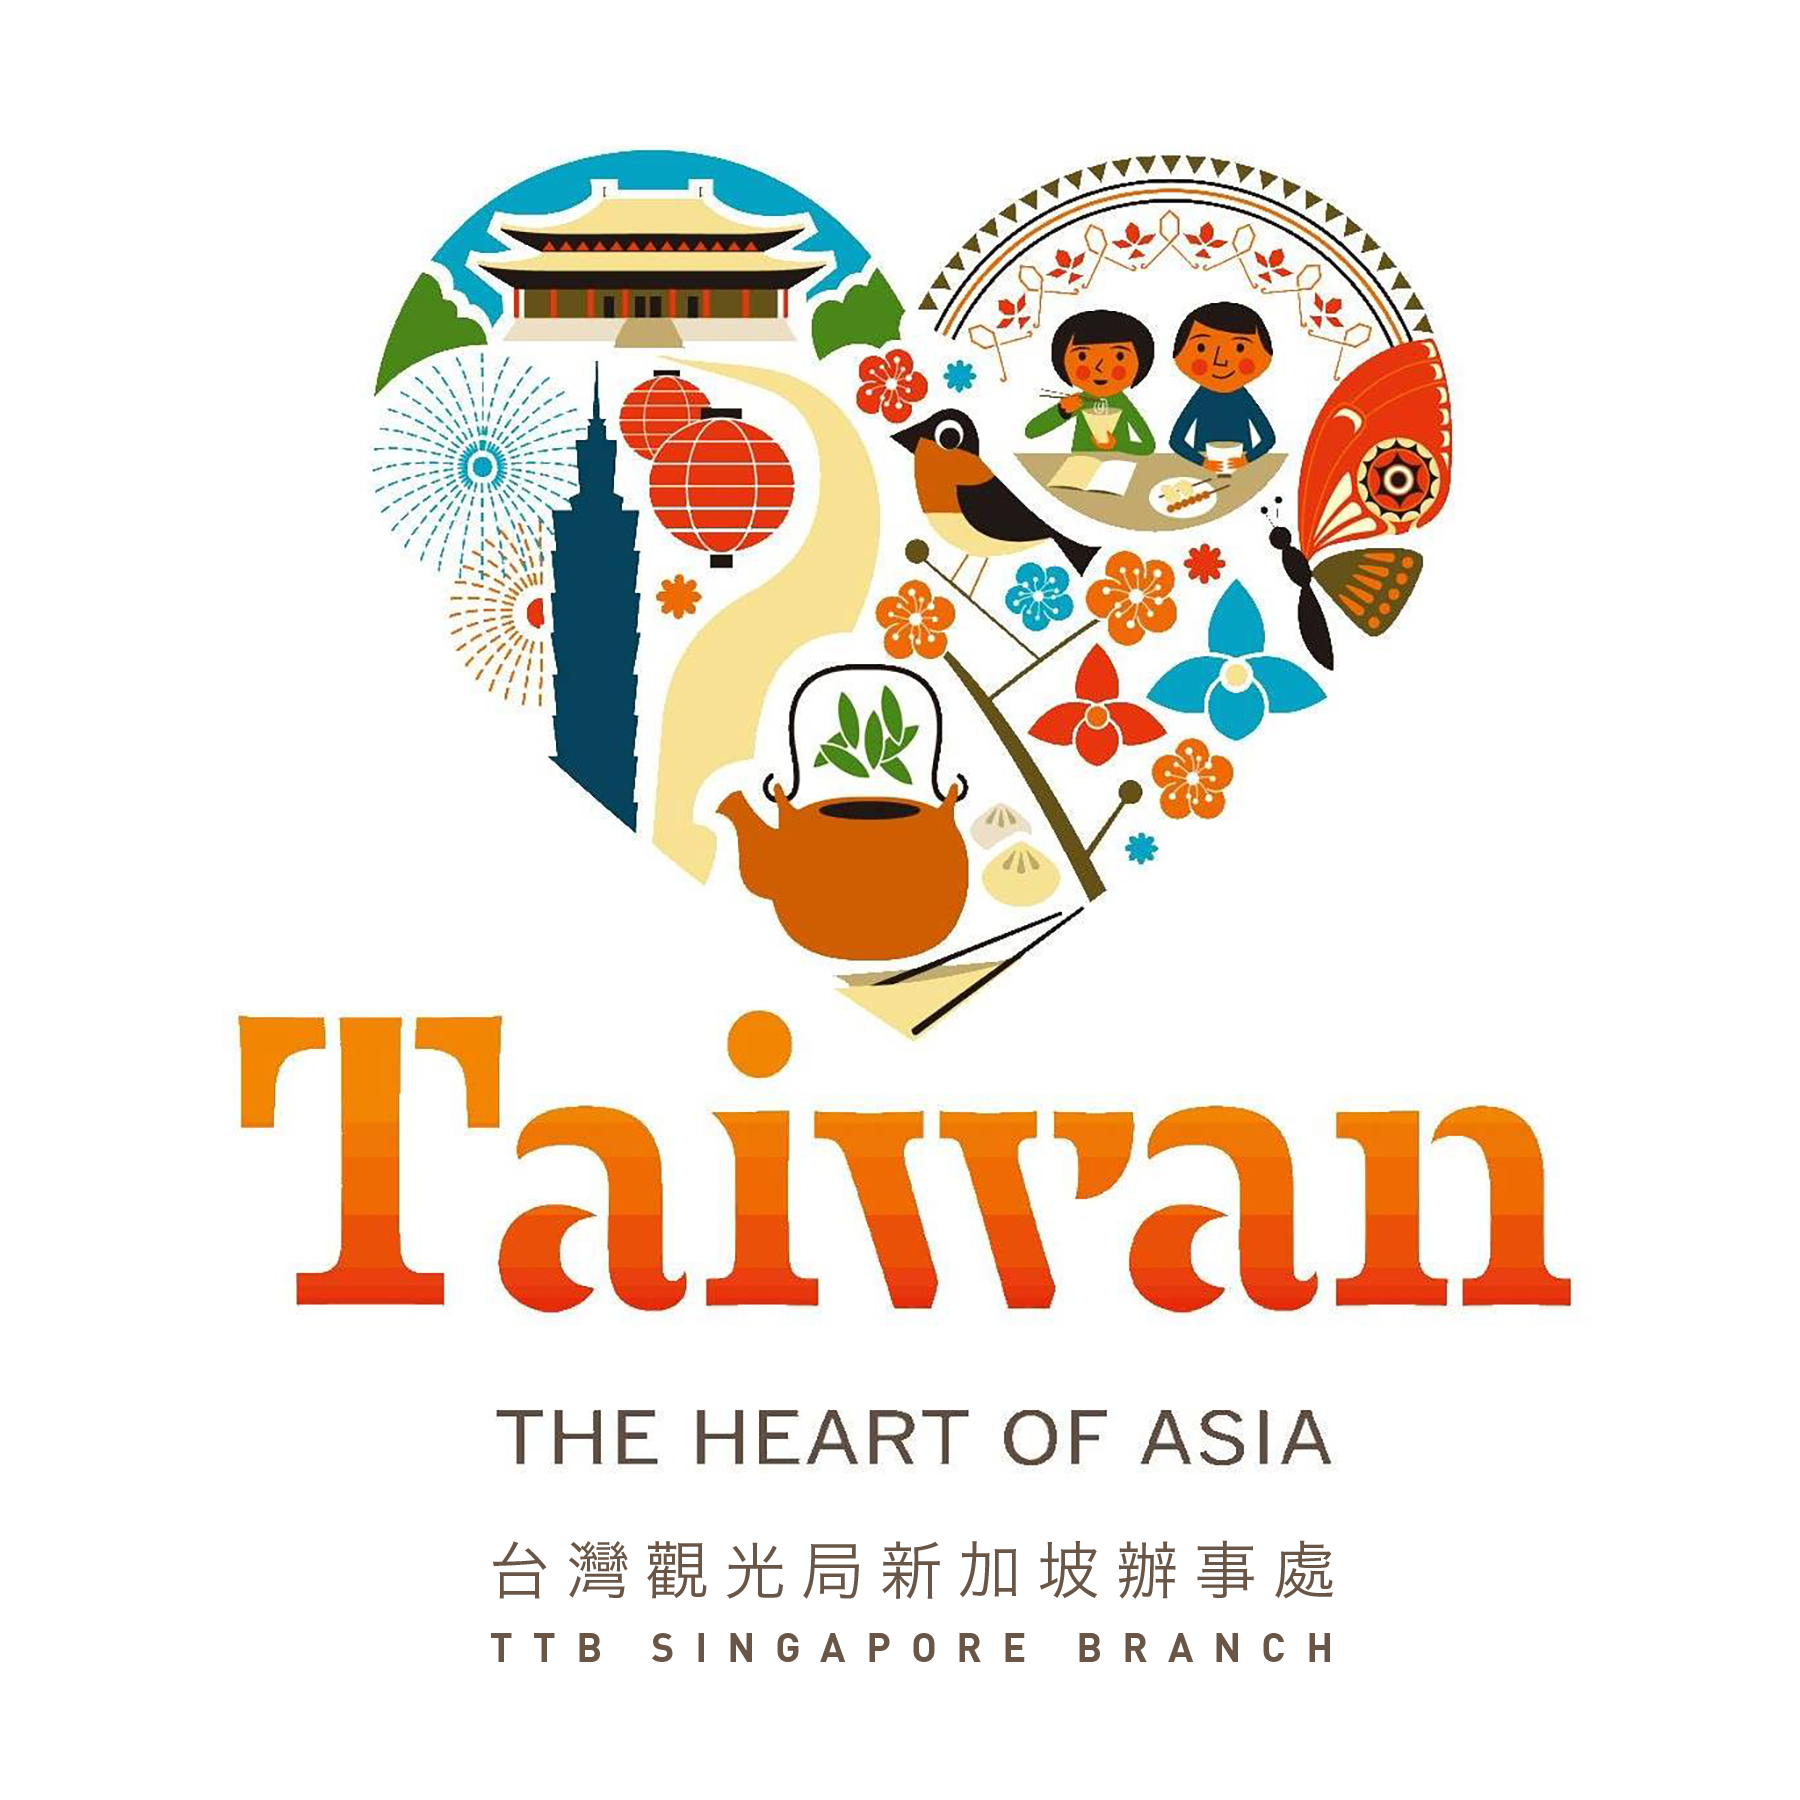 taiwan tourism bureau singapore office